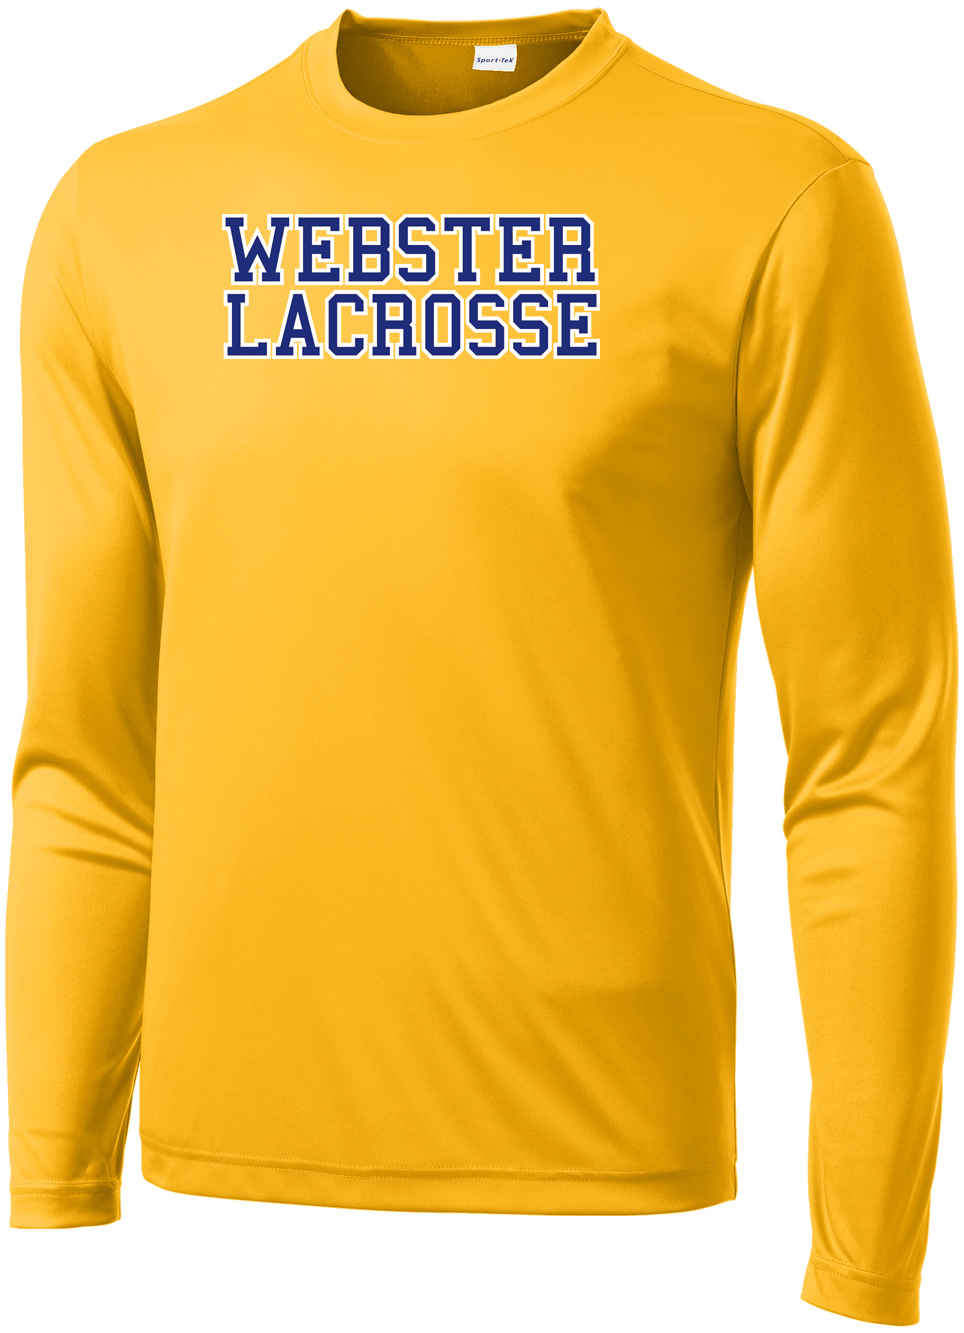 Webster Lacrosse Men's Gold Long Sleeve Performance Shirt